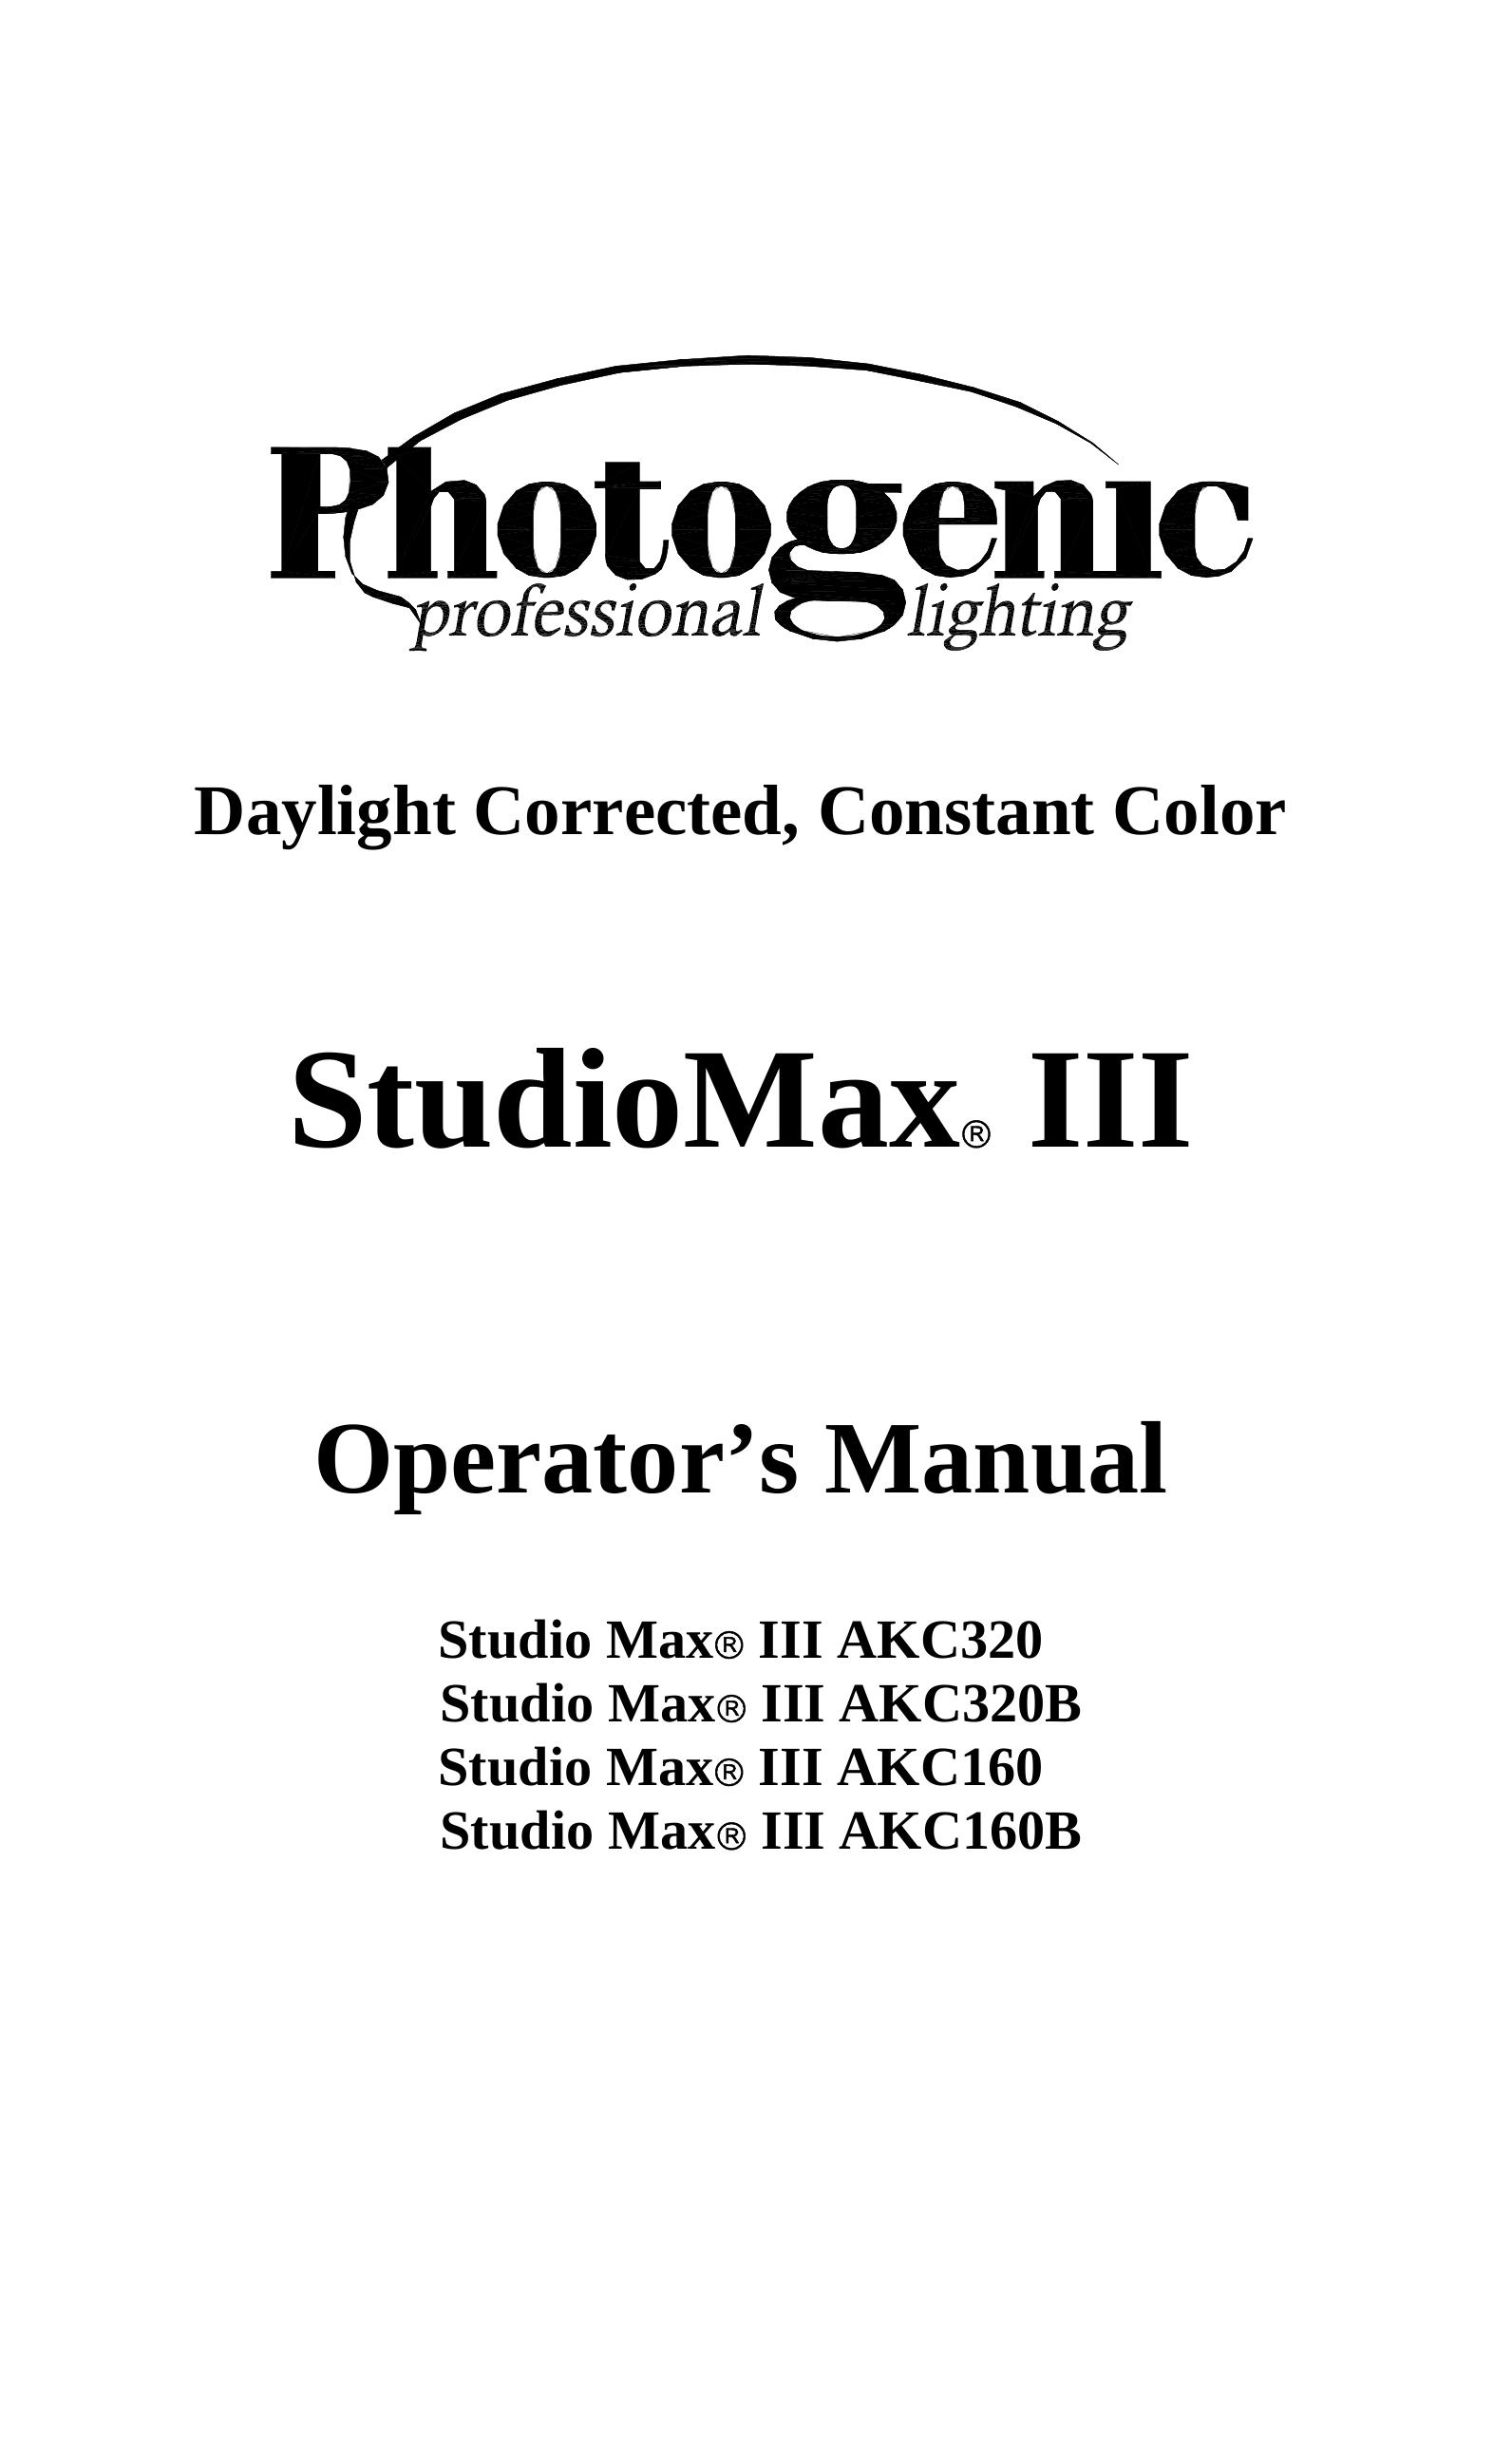 Photogenic Professional Lighting AKC320 Camera Flash User Manual